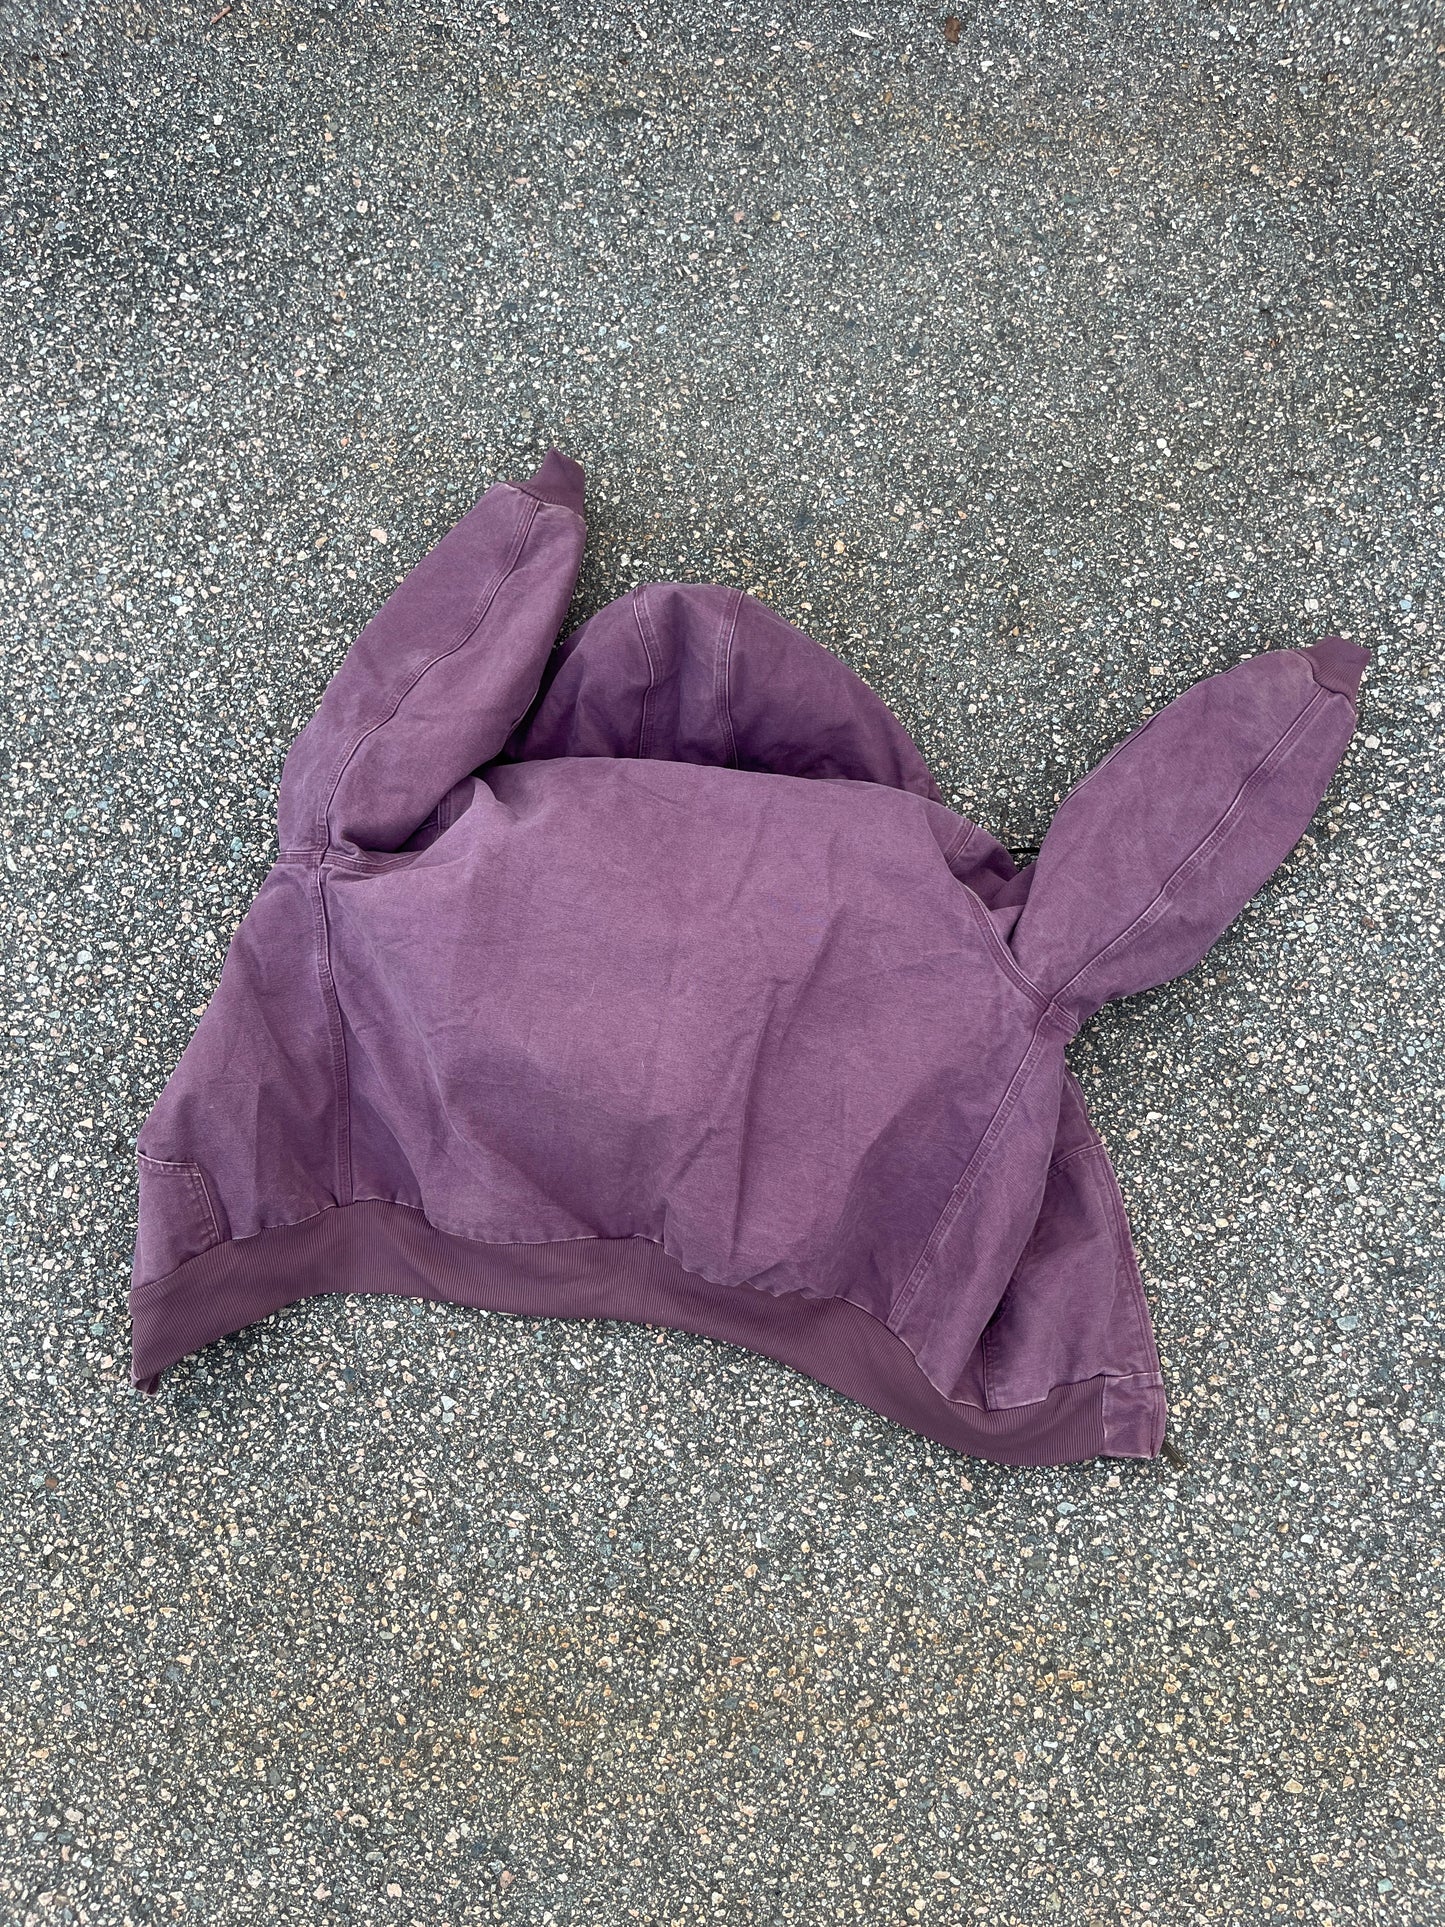 Faded Purple Carhartt Active Jacket - Boxy Large